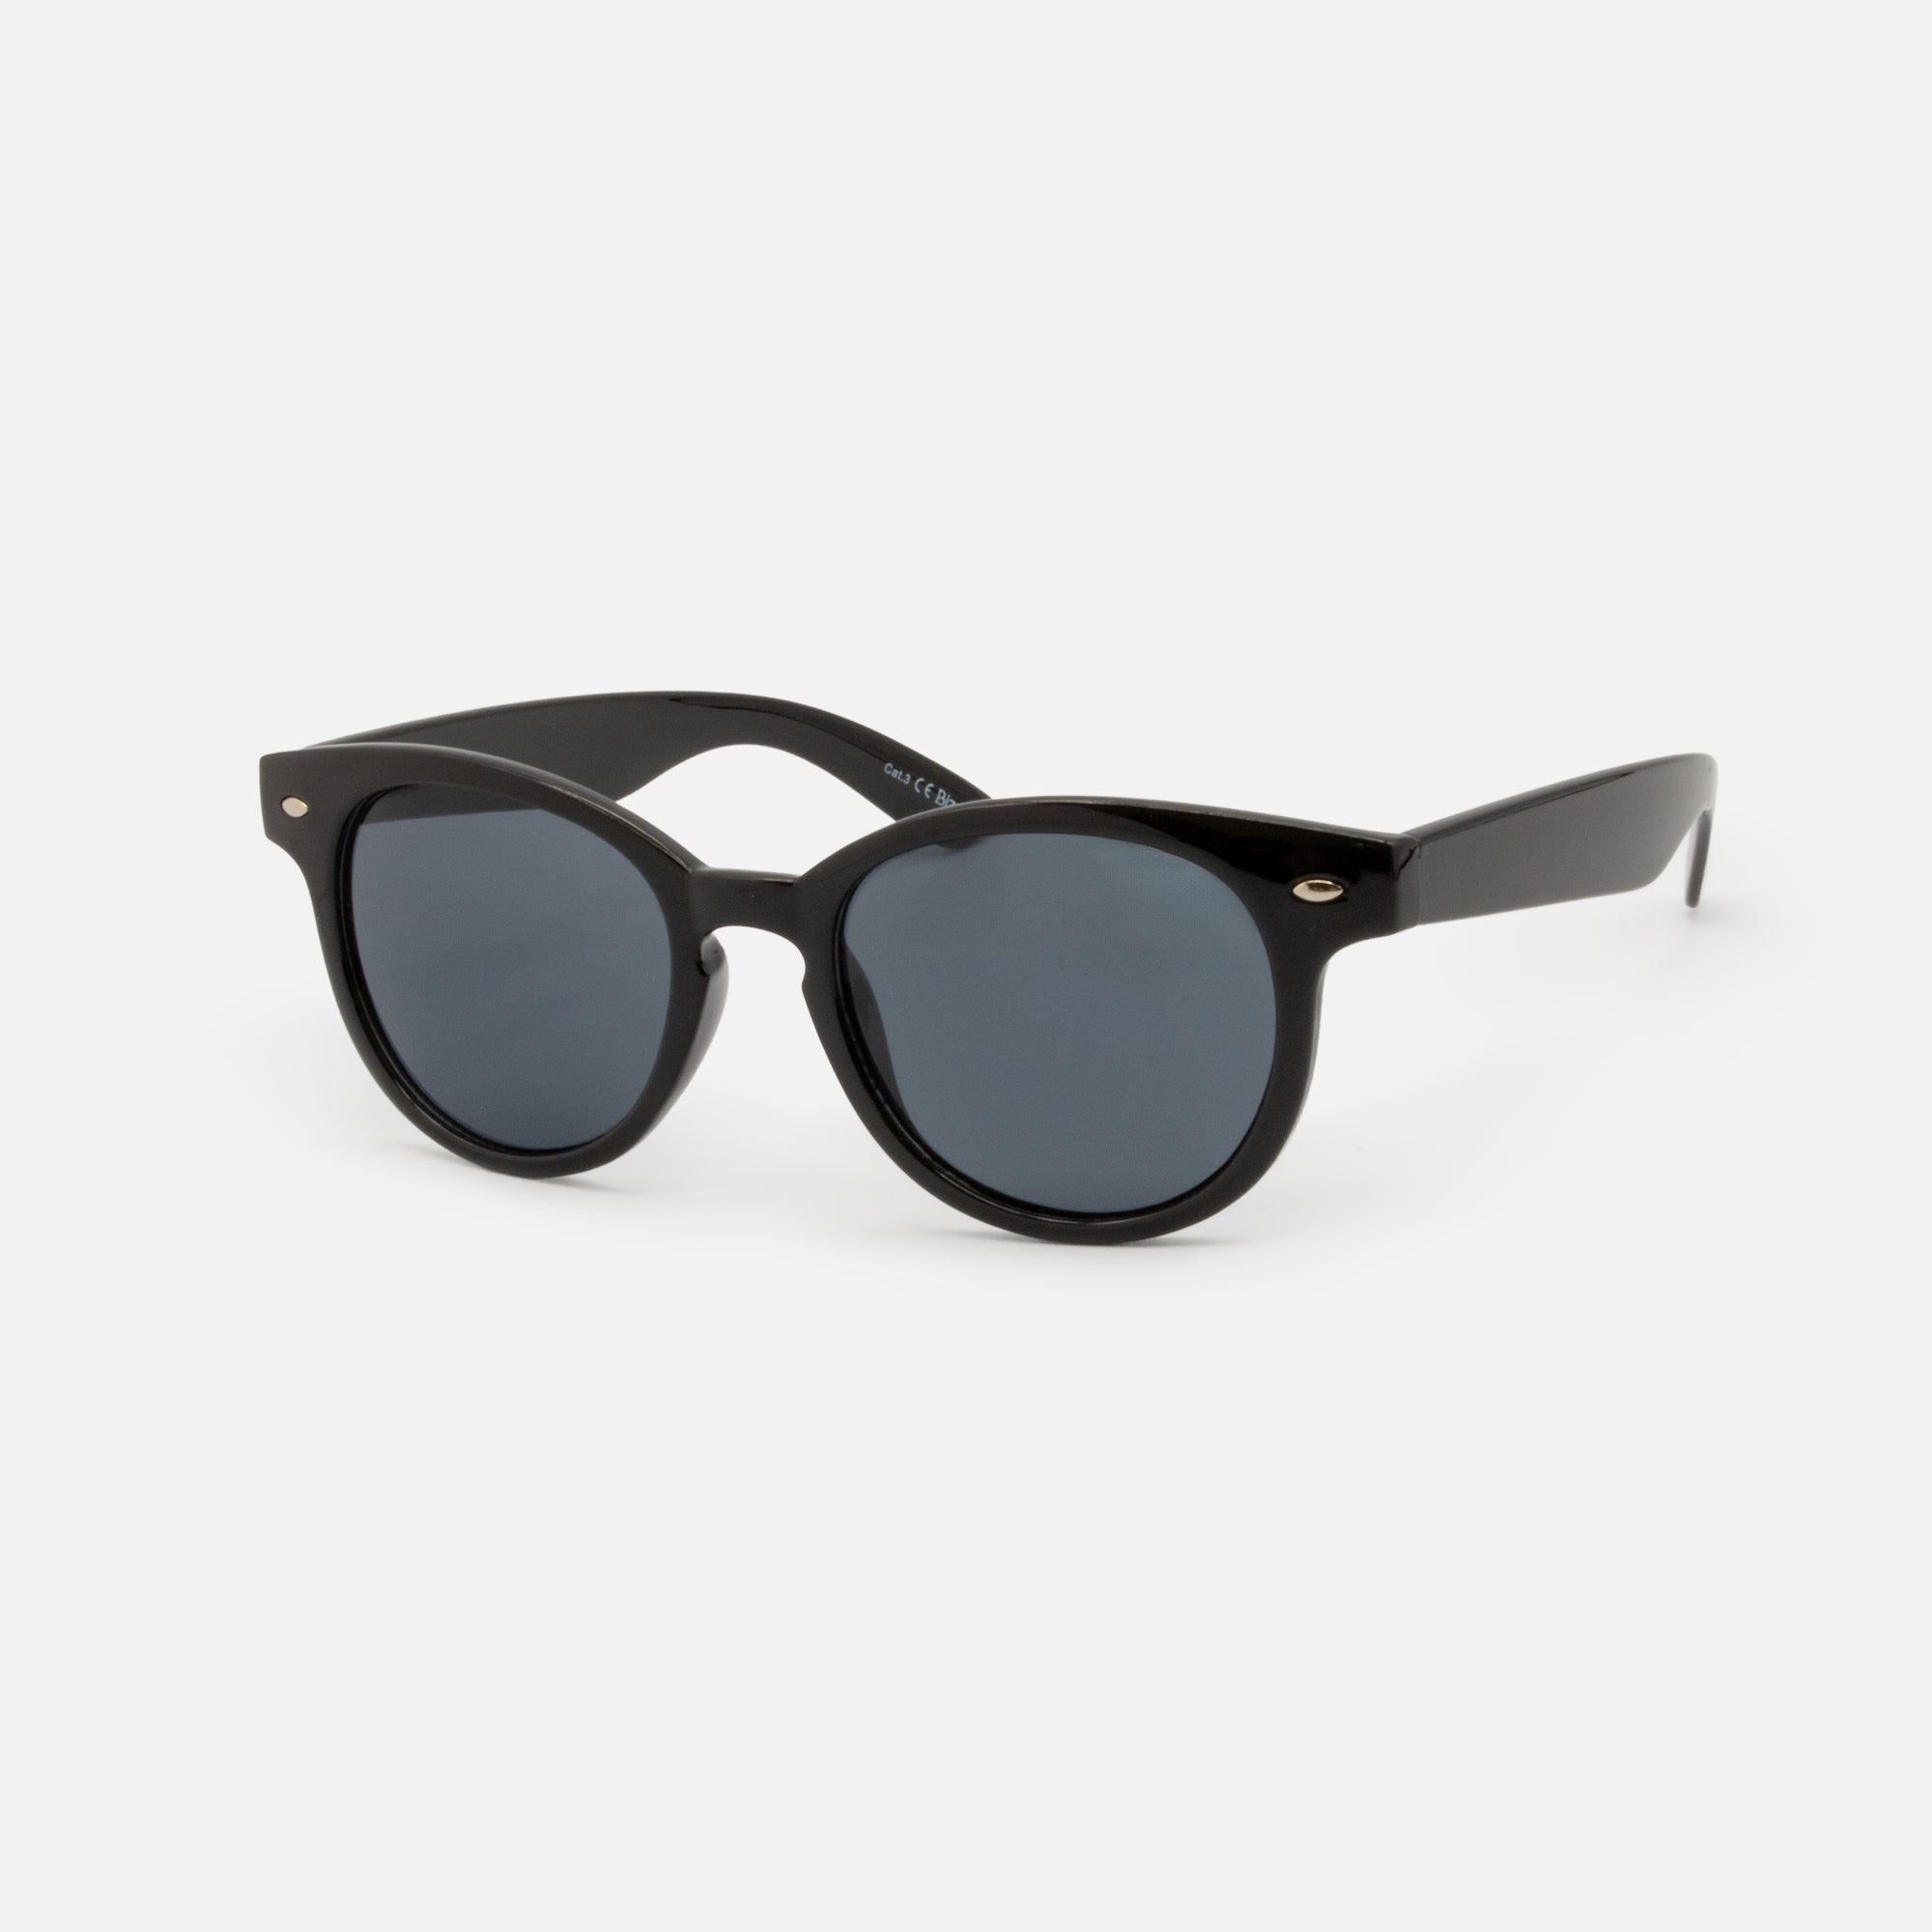 Black round sunglasses